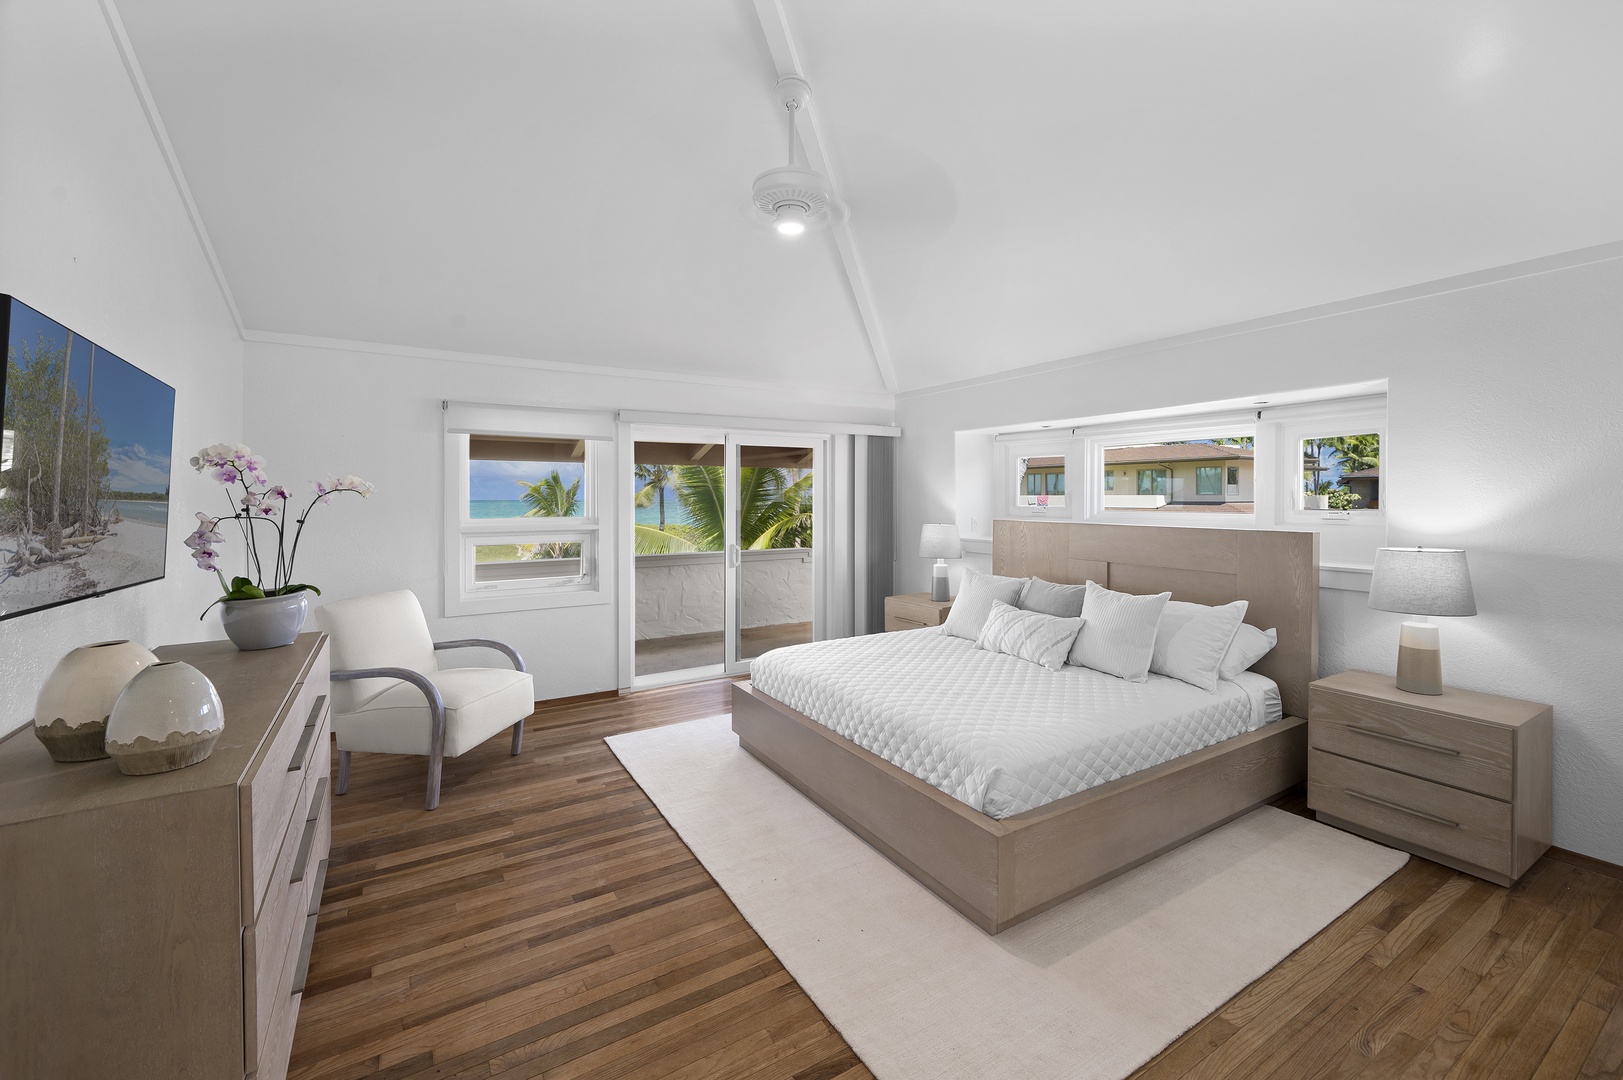 Kailua Vacation Rentals, Kailua Hale Kahakai - The Main Bedroom Suite boasts a king bed and ocean views